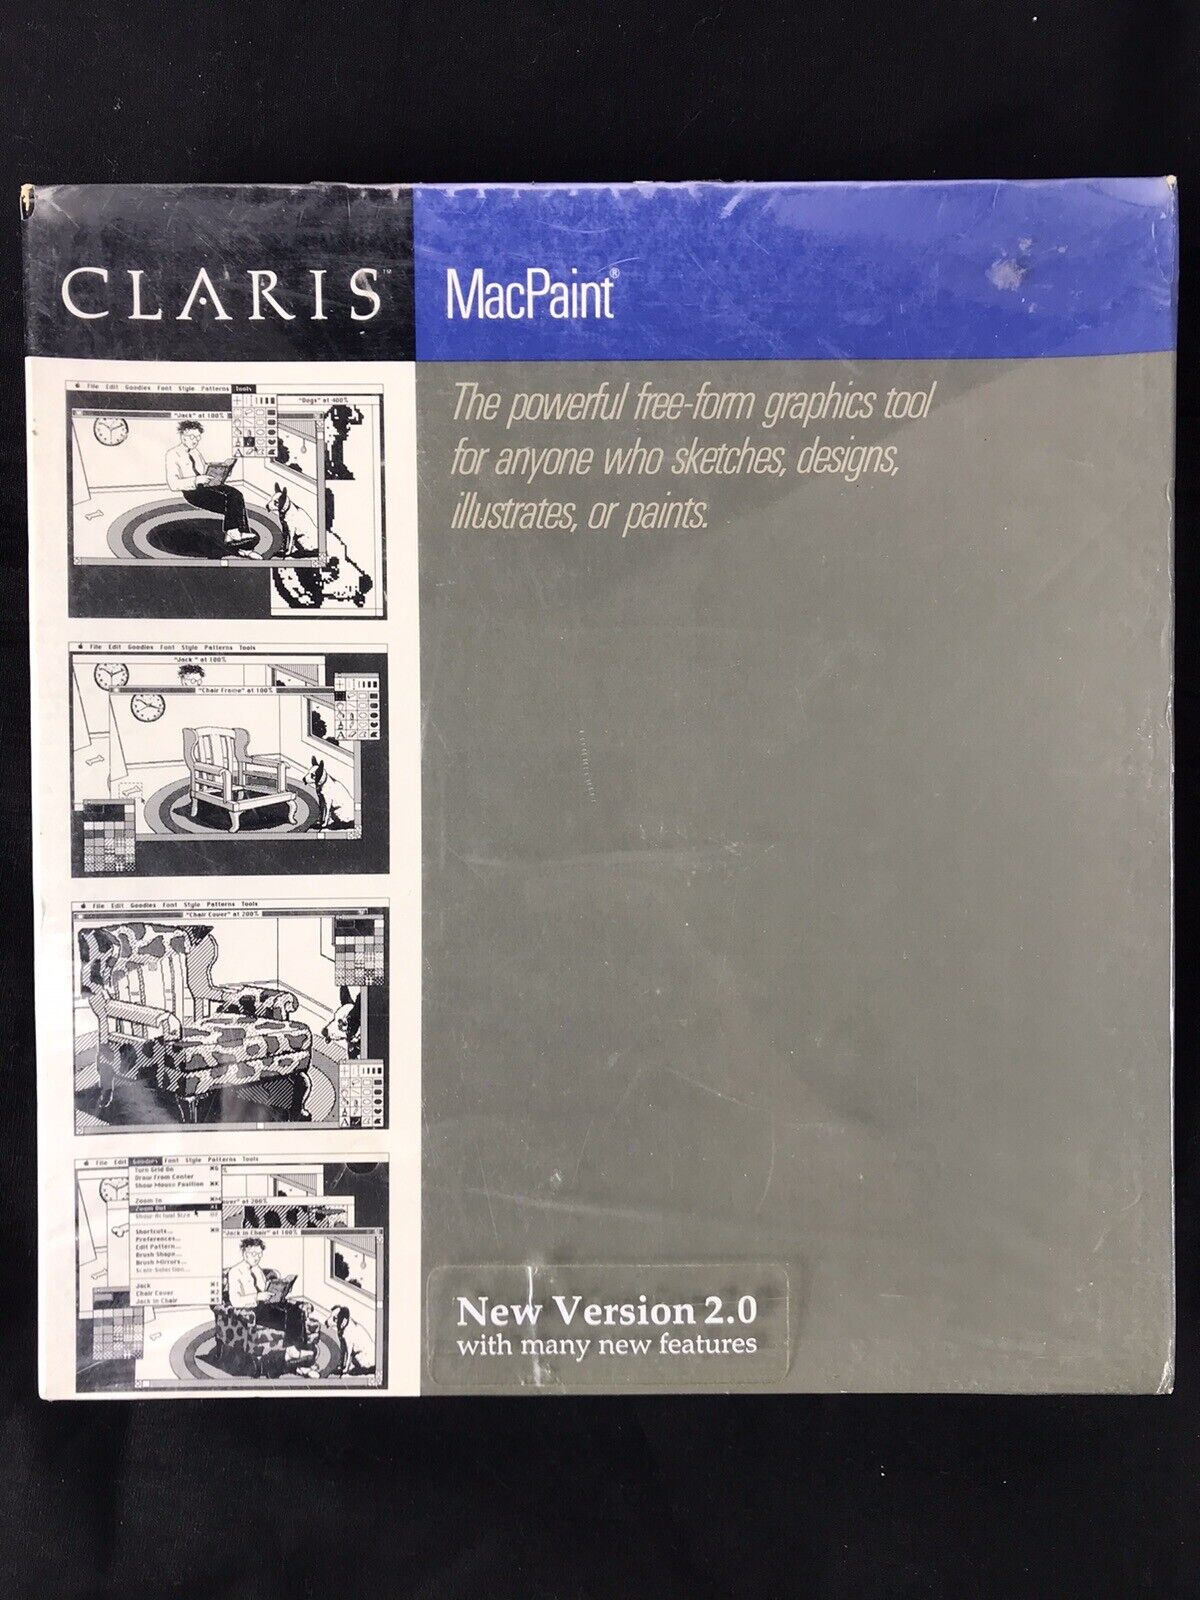 Claris MacPaint 2.0, 1987 Vintage Macintosh Computer Software - New, Unopened